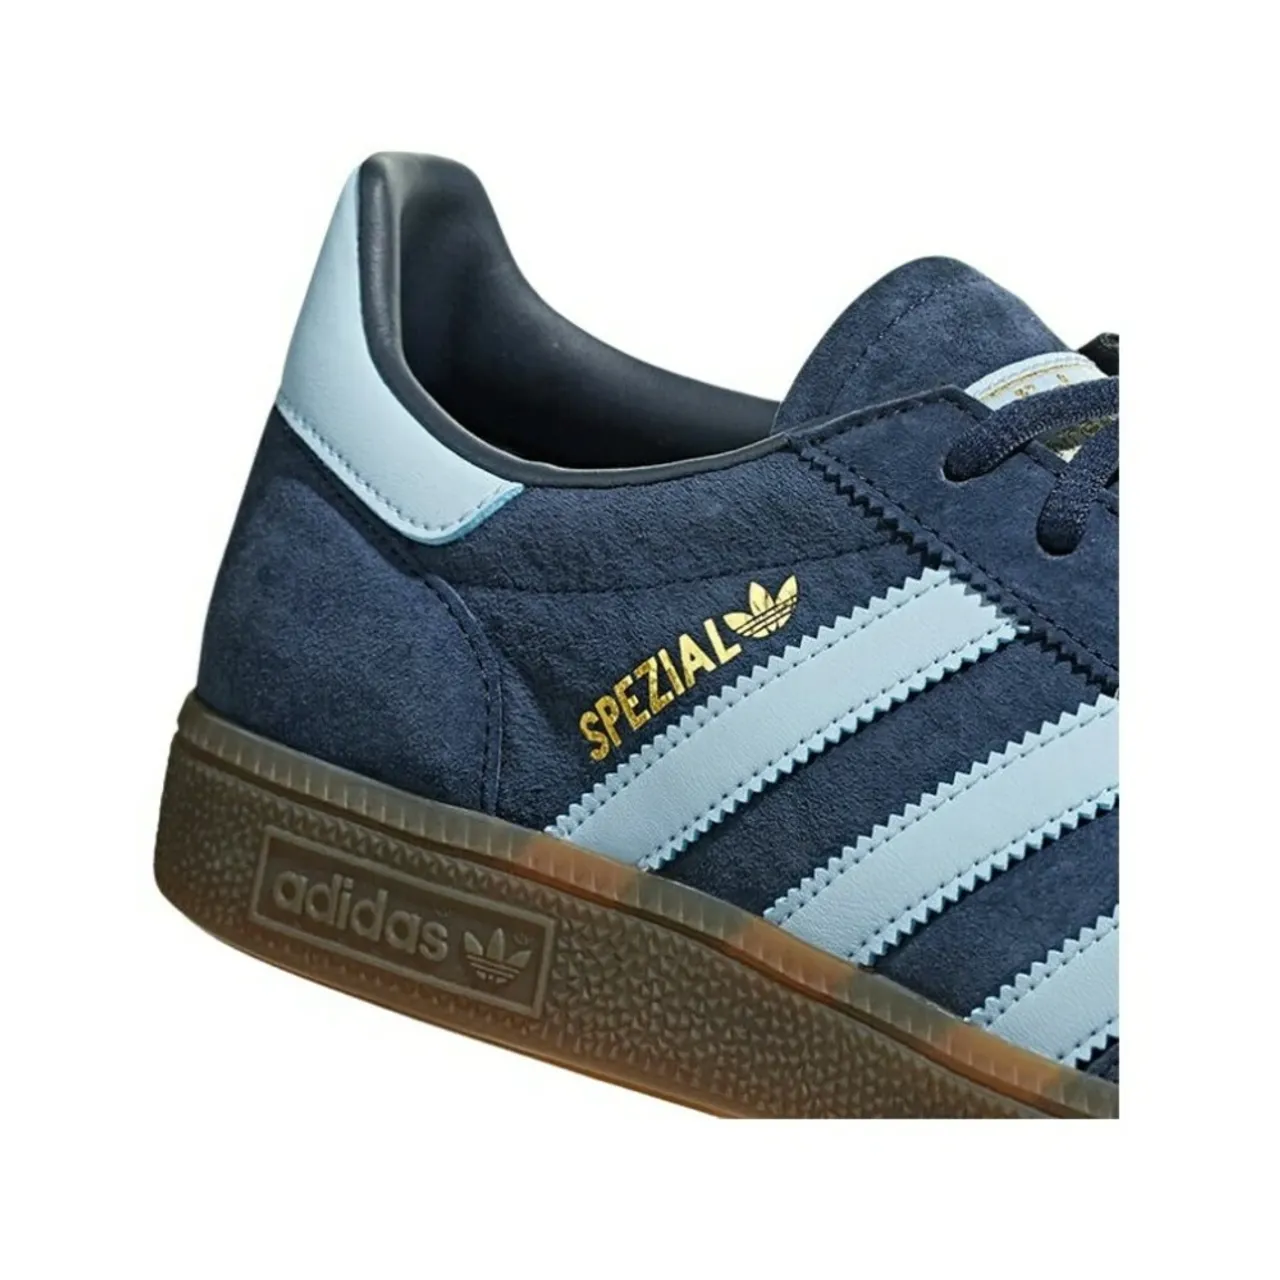 Adidas Originals , Handball Spezial Sneakers ,Blue male, Sizes: 9 1/3 UK, 8 2/3 UK, 12 1/2 UK, 14 UK, 10 2/3 UK, 12 UK, 8 UK, 12 2/3 UK, 11 1/3 UK, 10